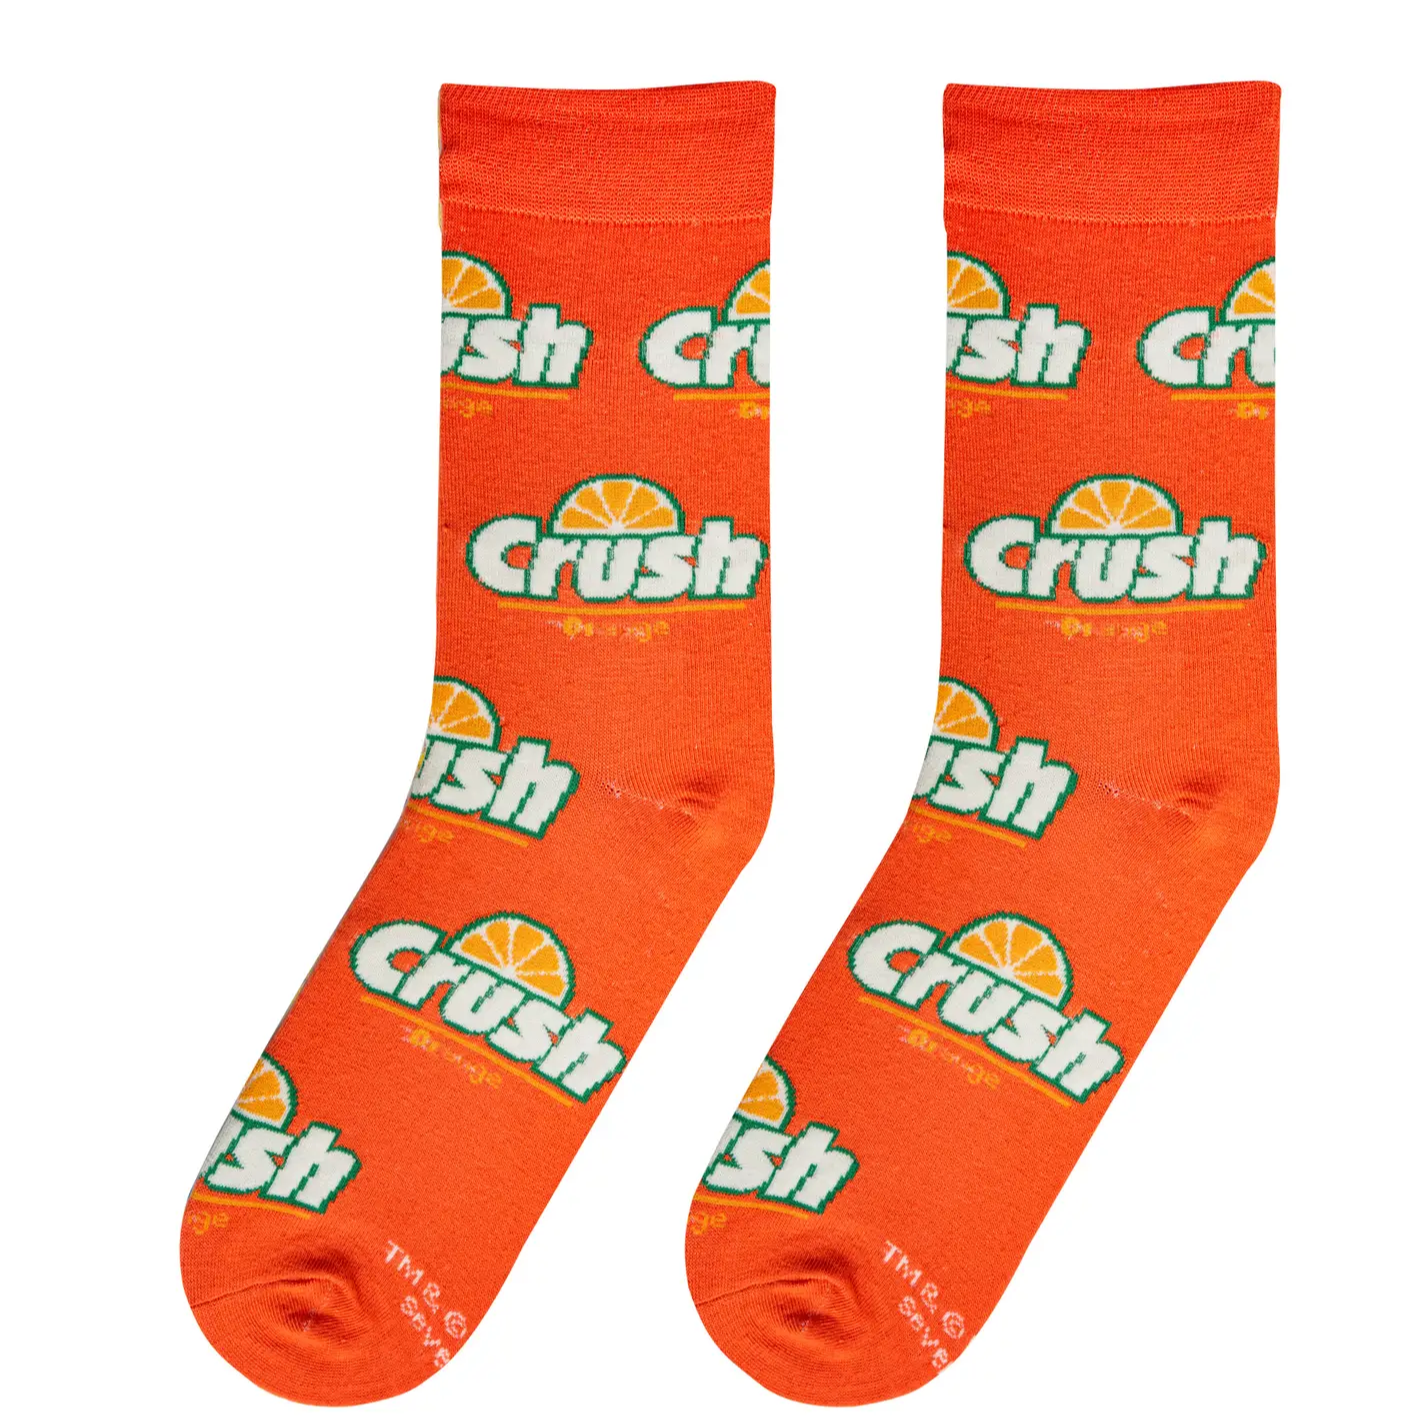 Socks - Large Crew - Crush